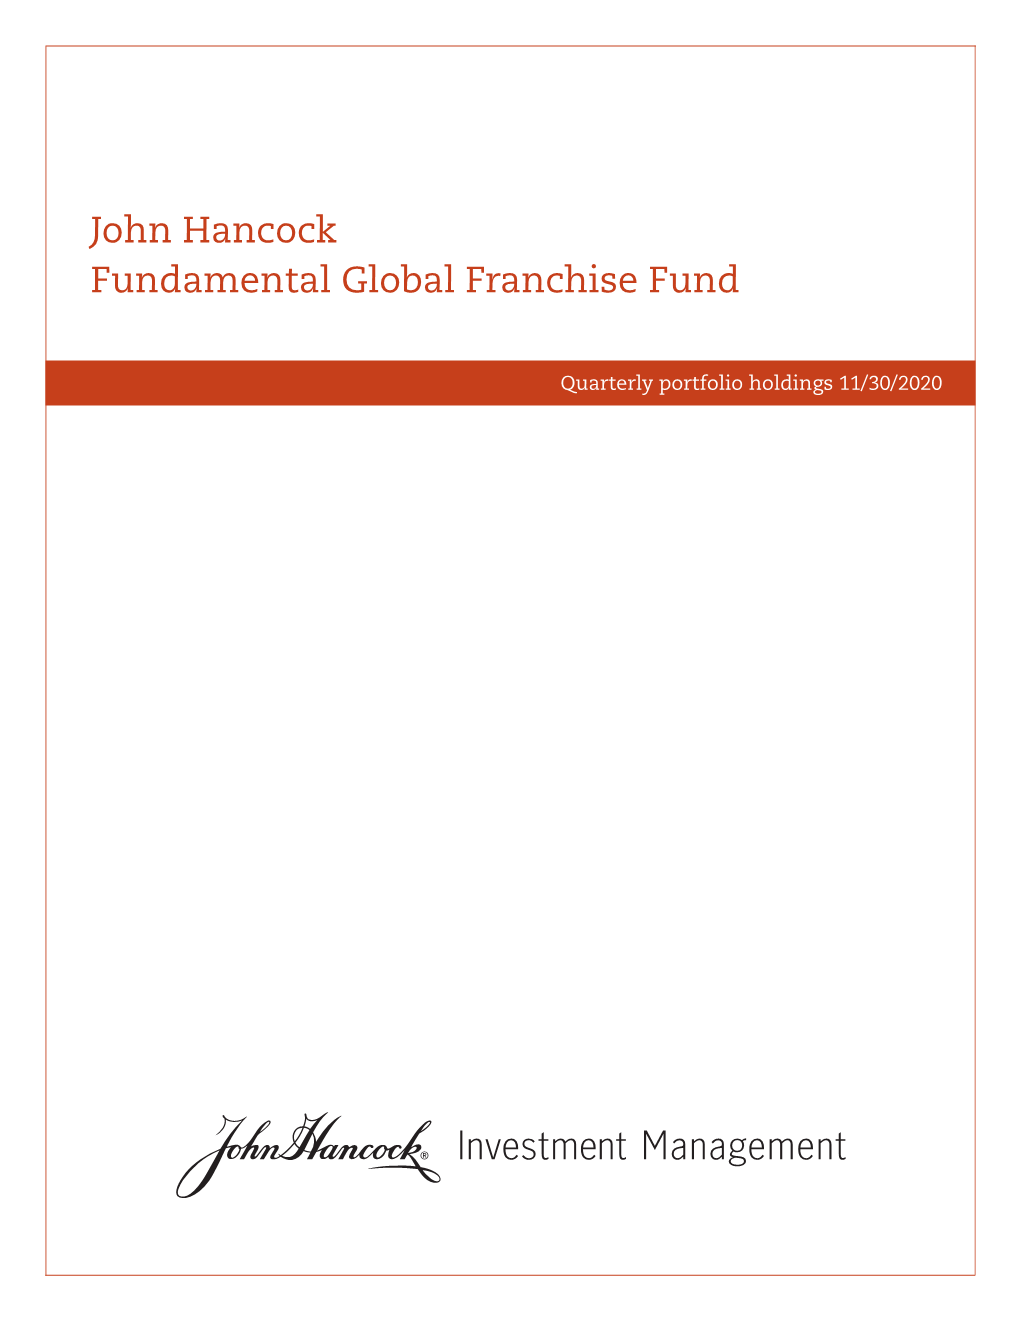 John Hancock Fundamental Global Franchise Fund